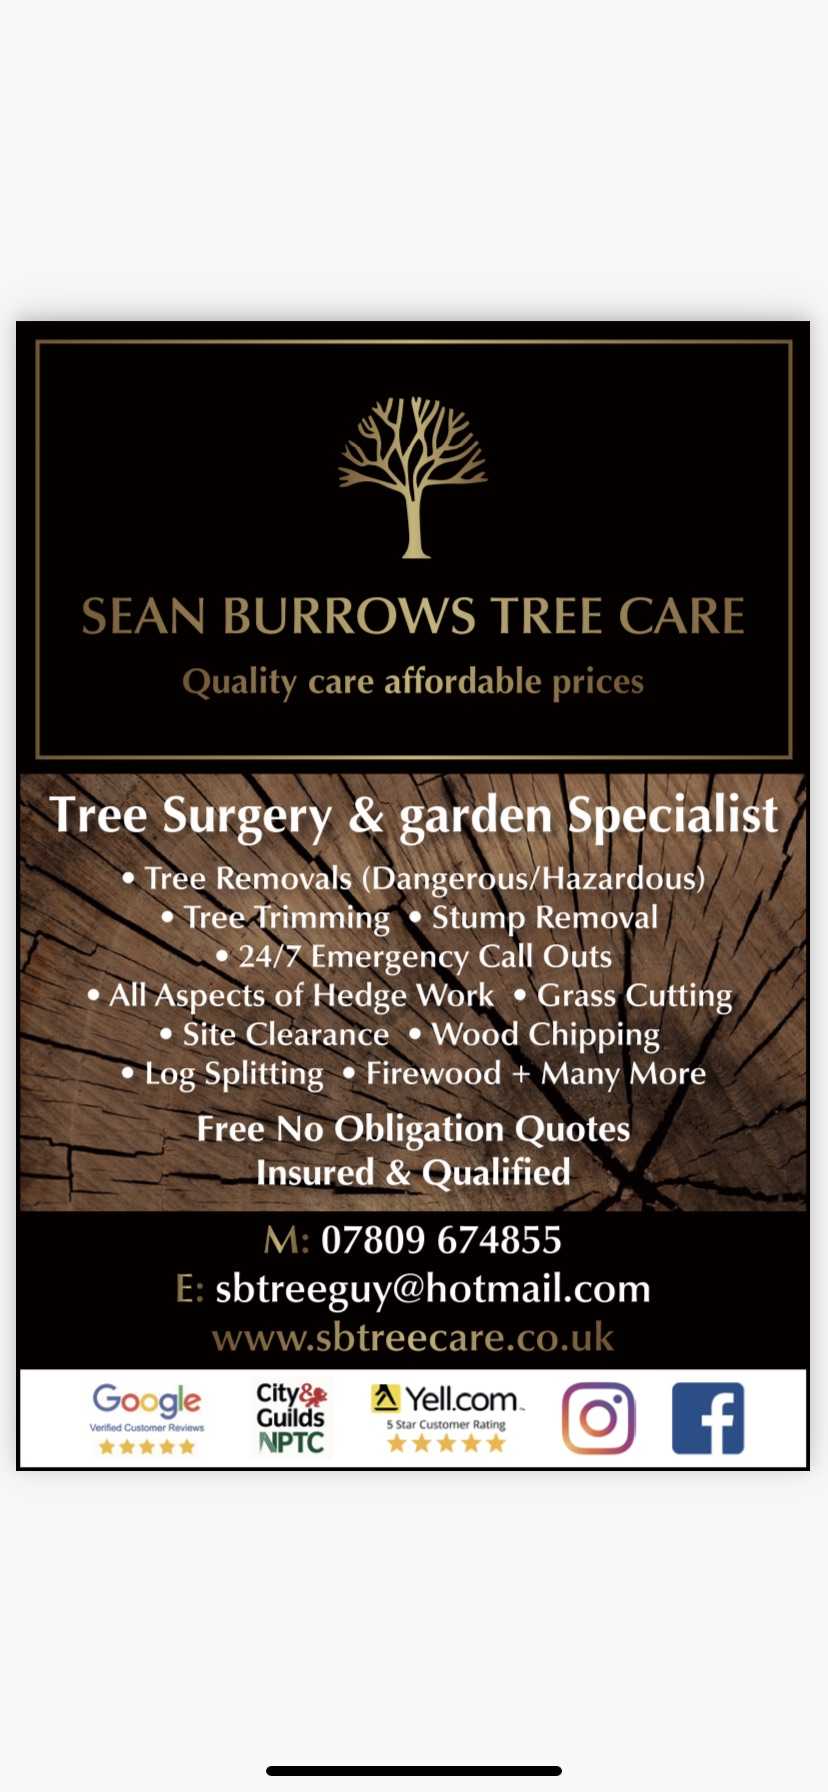 Sean Burrows Tree Care